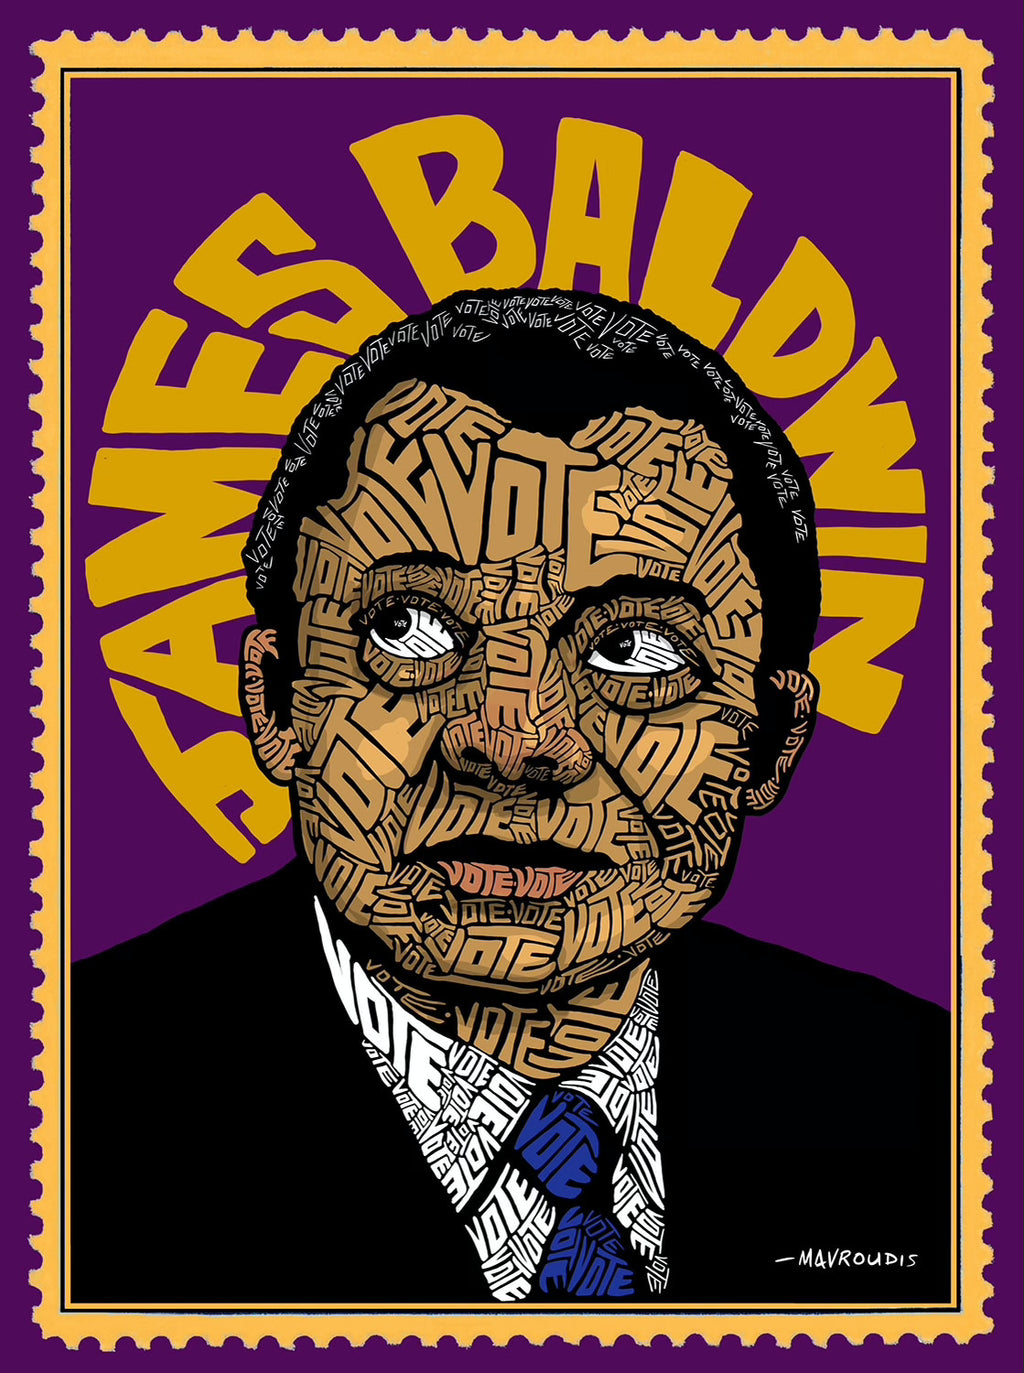 James Baldwin "Vote" Print by John Mavroudis - Adele Gilani Art Gallery